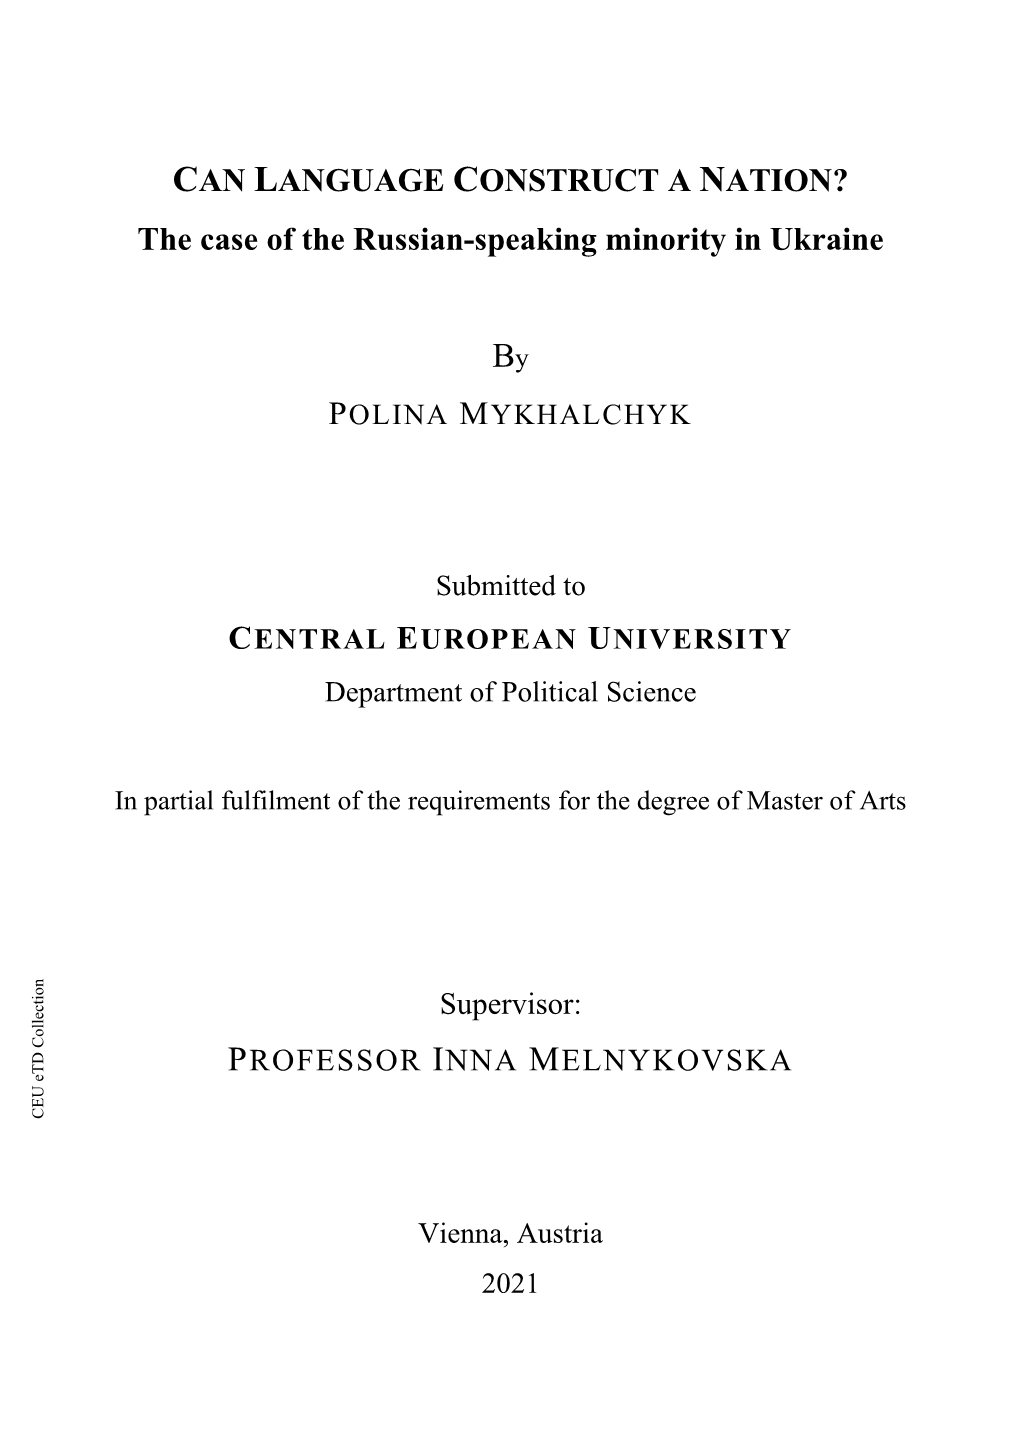 The Case of the Russian-Speaking Minority in Ukraine